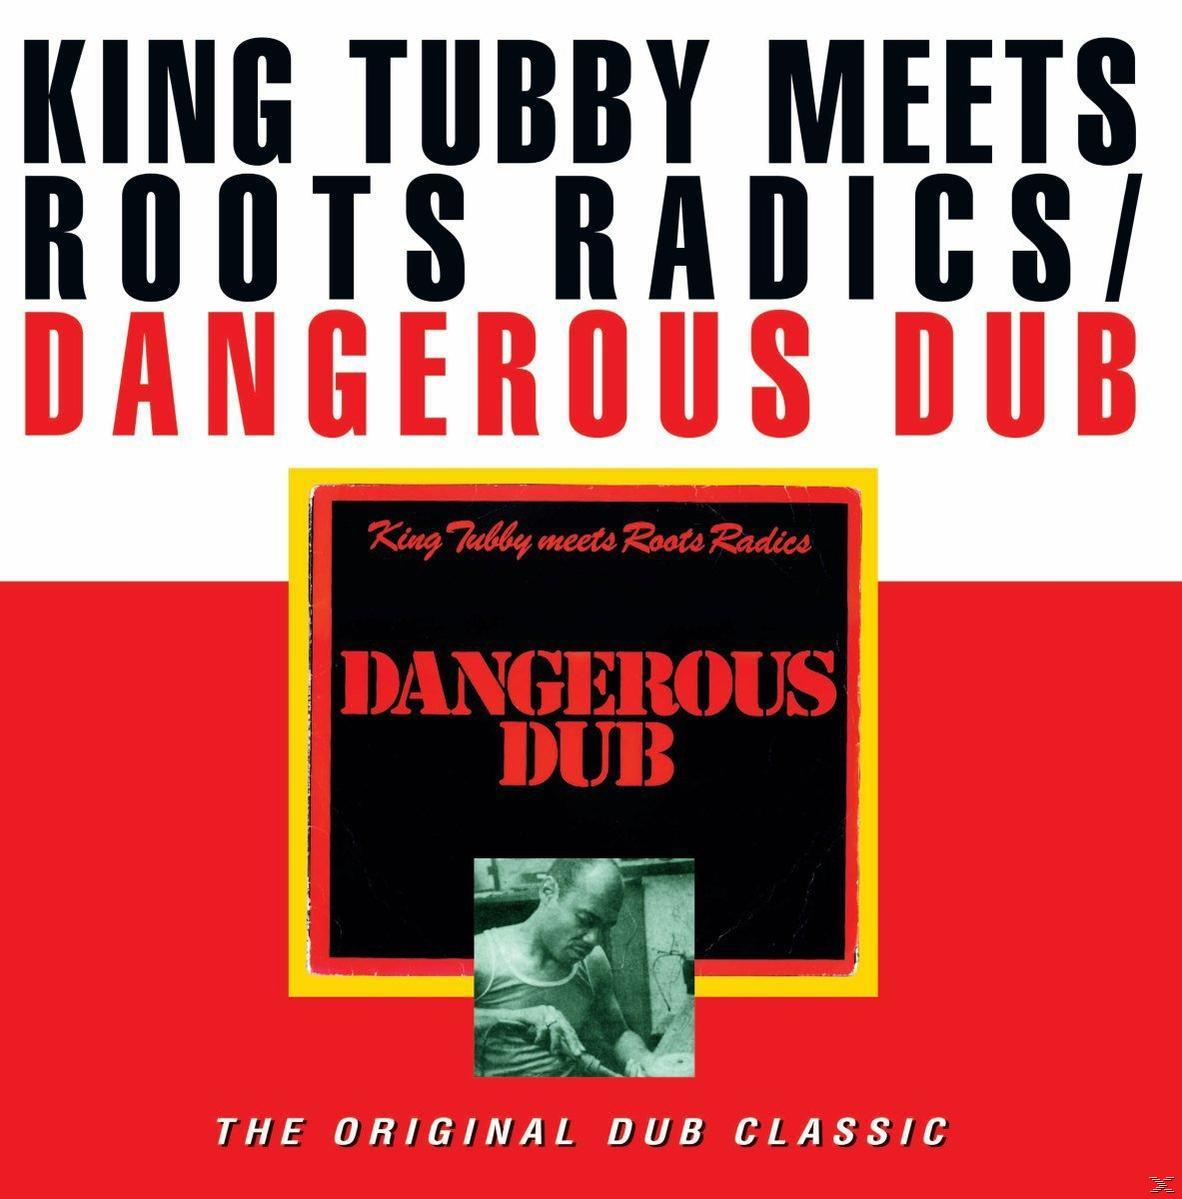 Roots CLASSIC) DUB Meets ORIGINAL (Vinyl) - DUB Radics King DANGEROUS - Tubby (THE